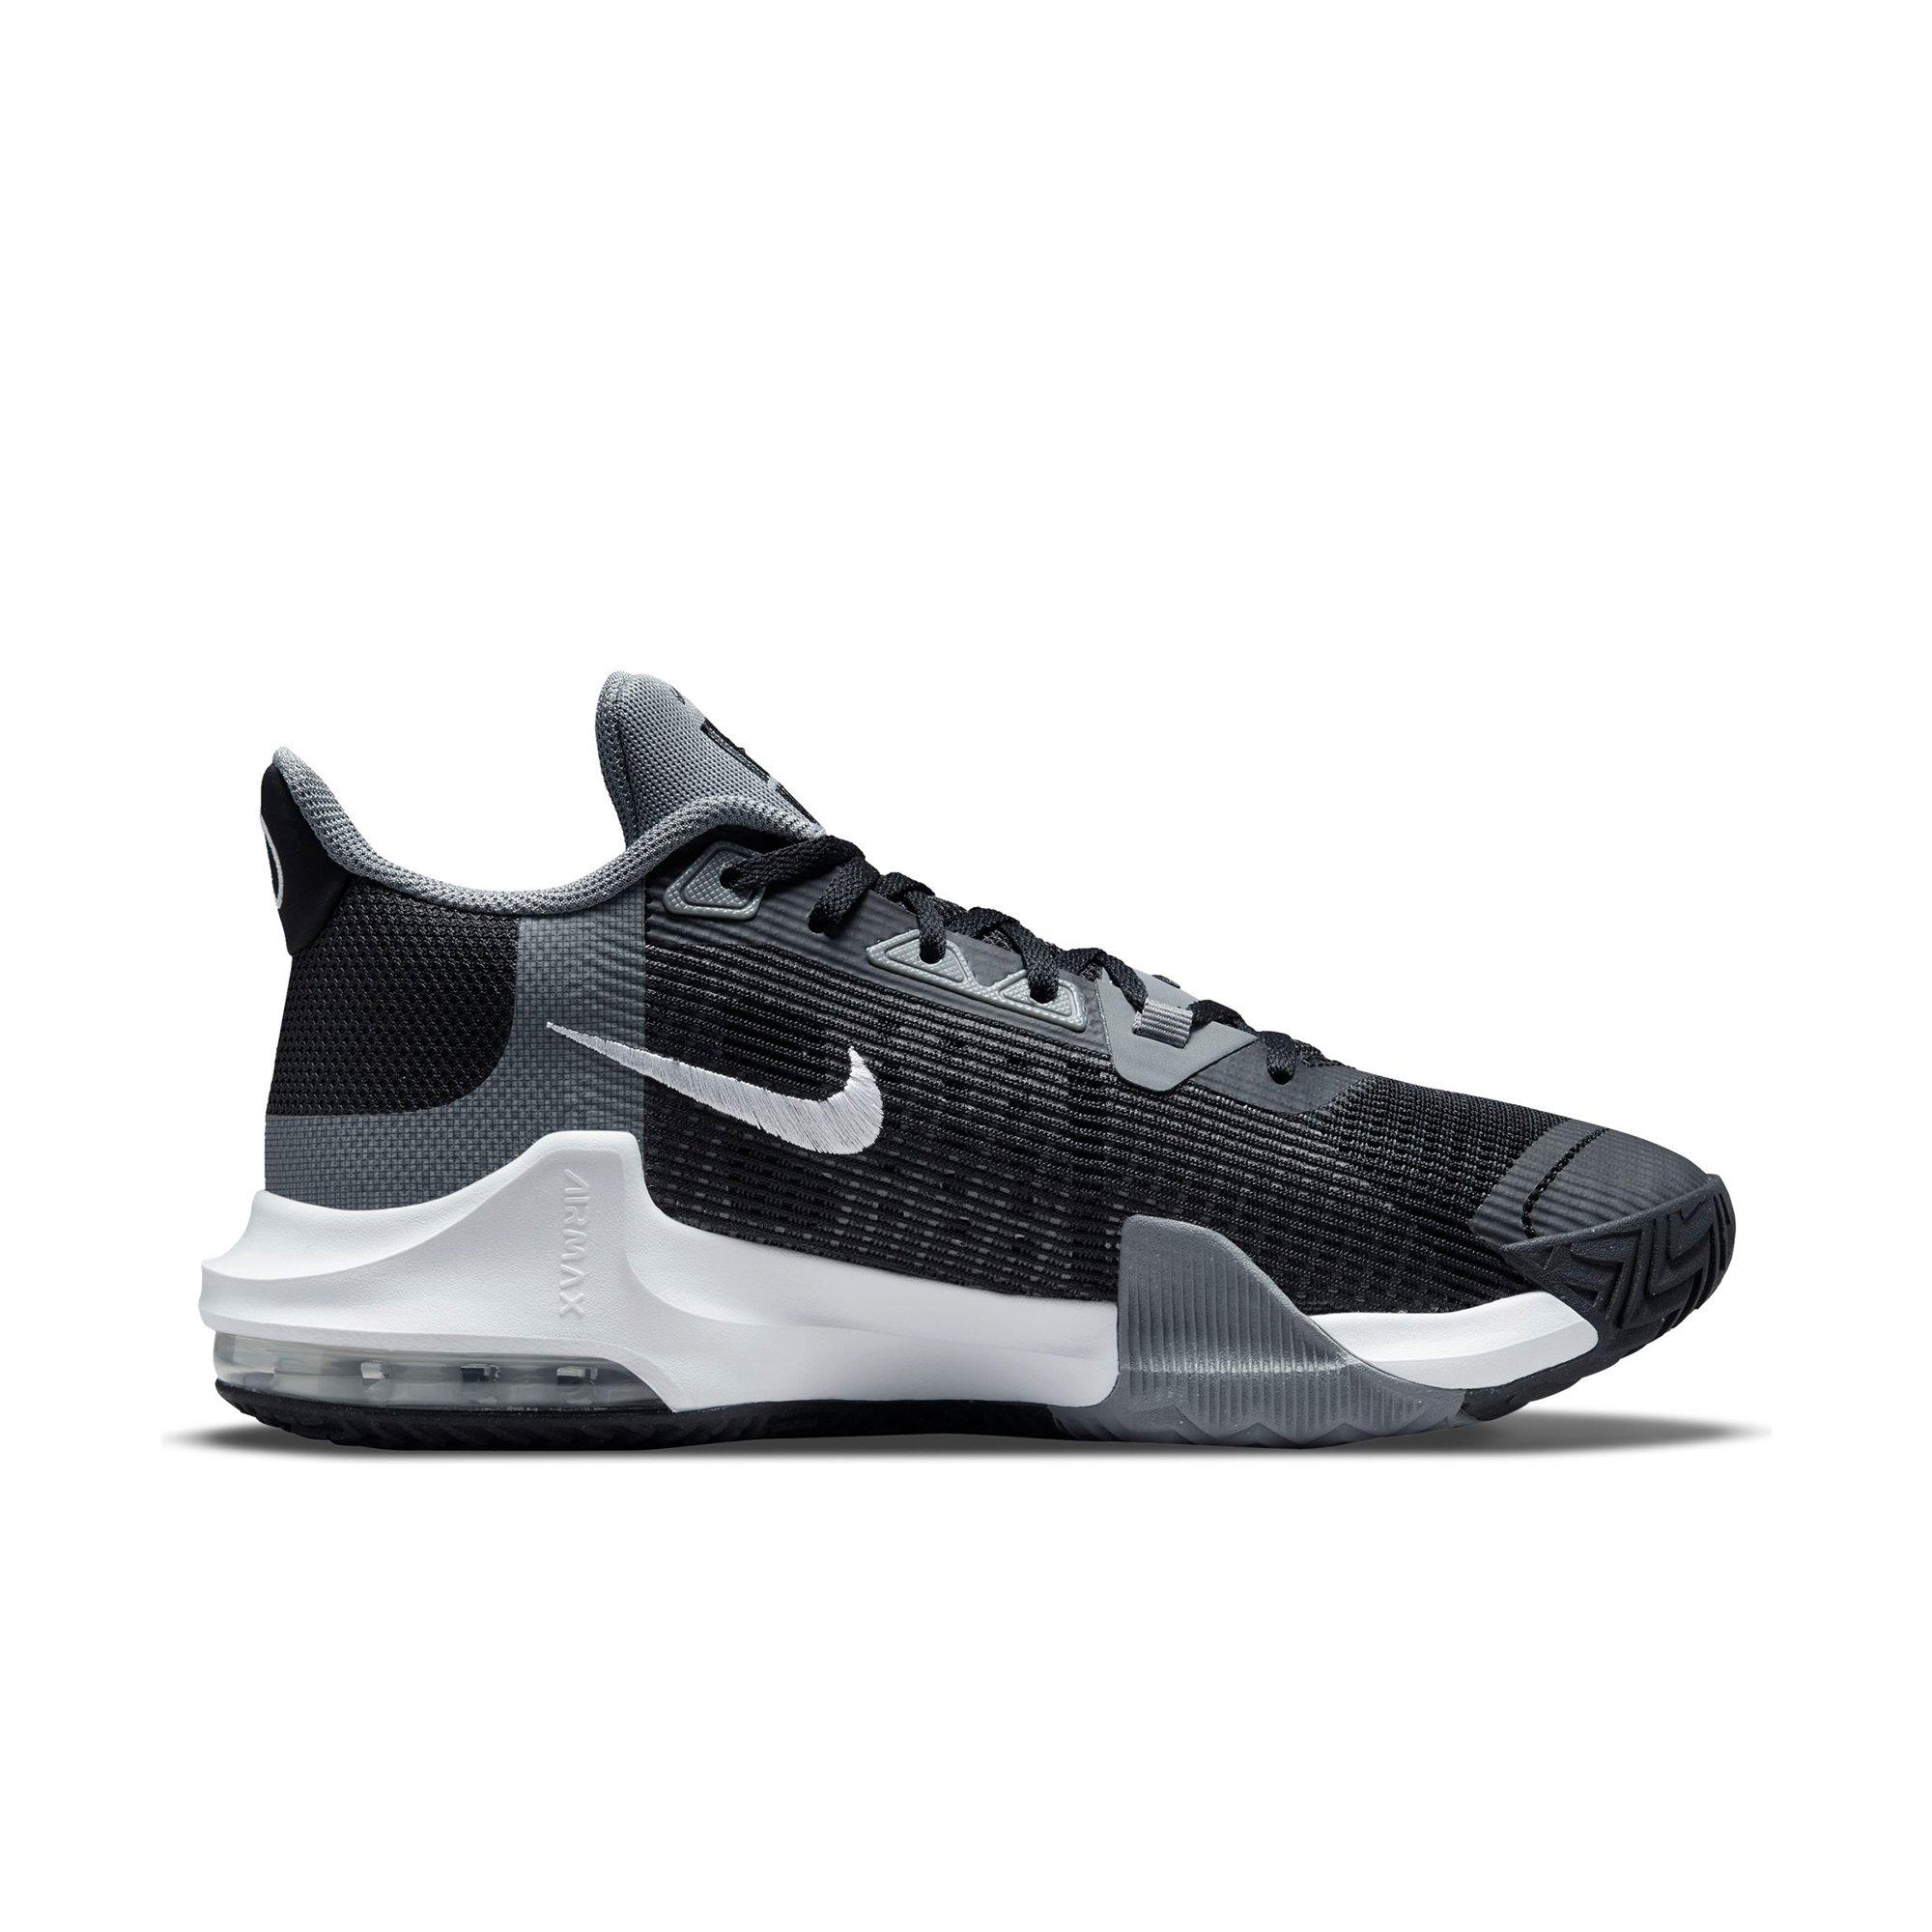 Nike Air Max Impact 3 "Black/White/Cool Grey" Basketball Shoe